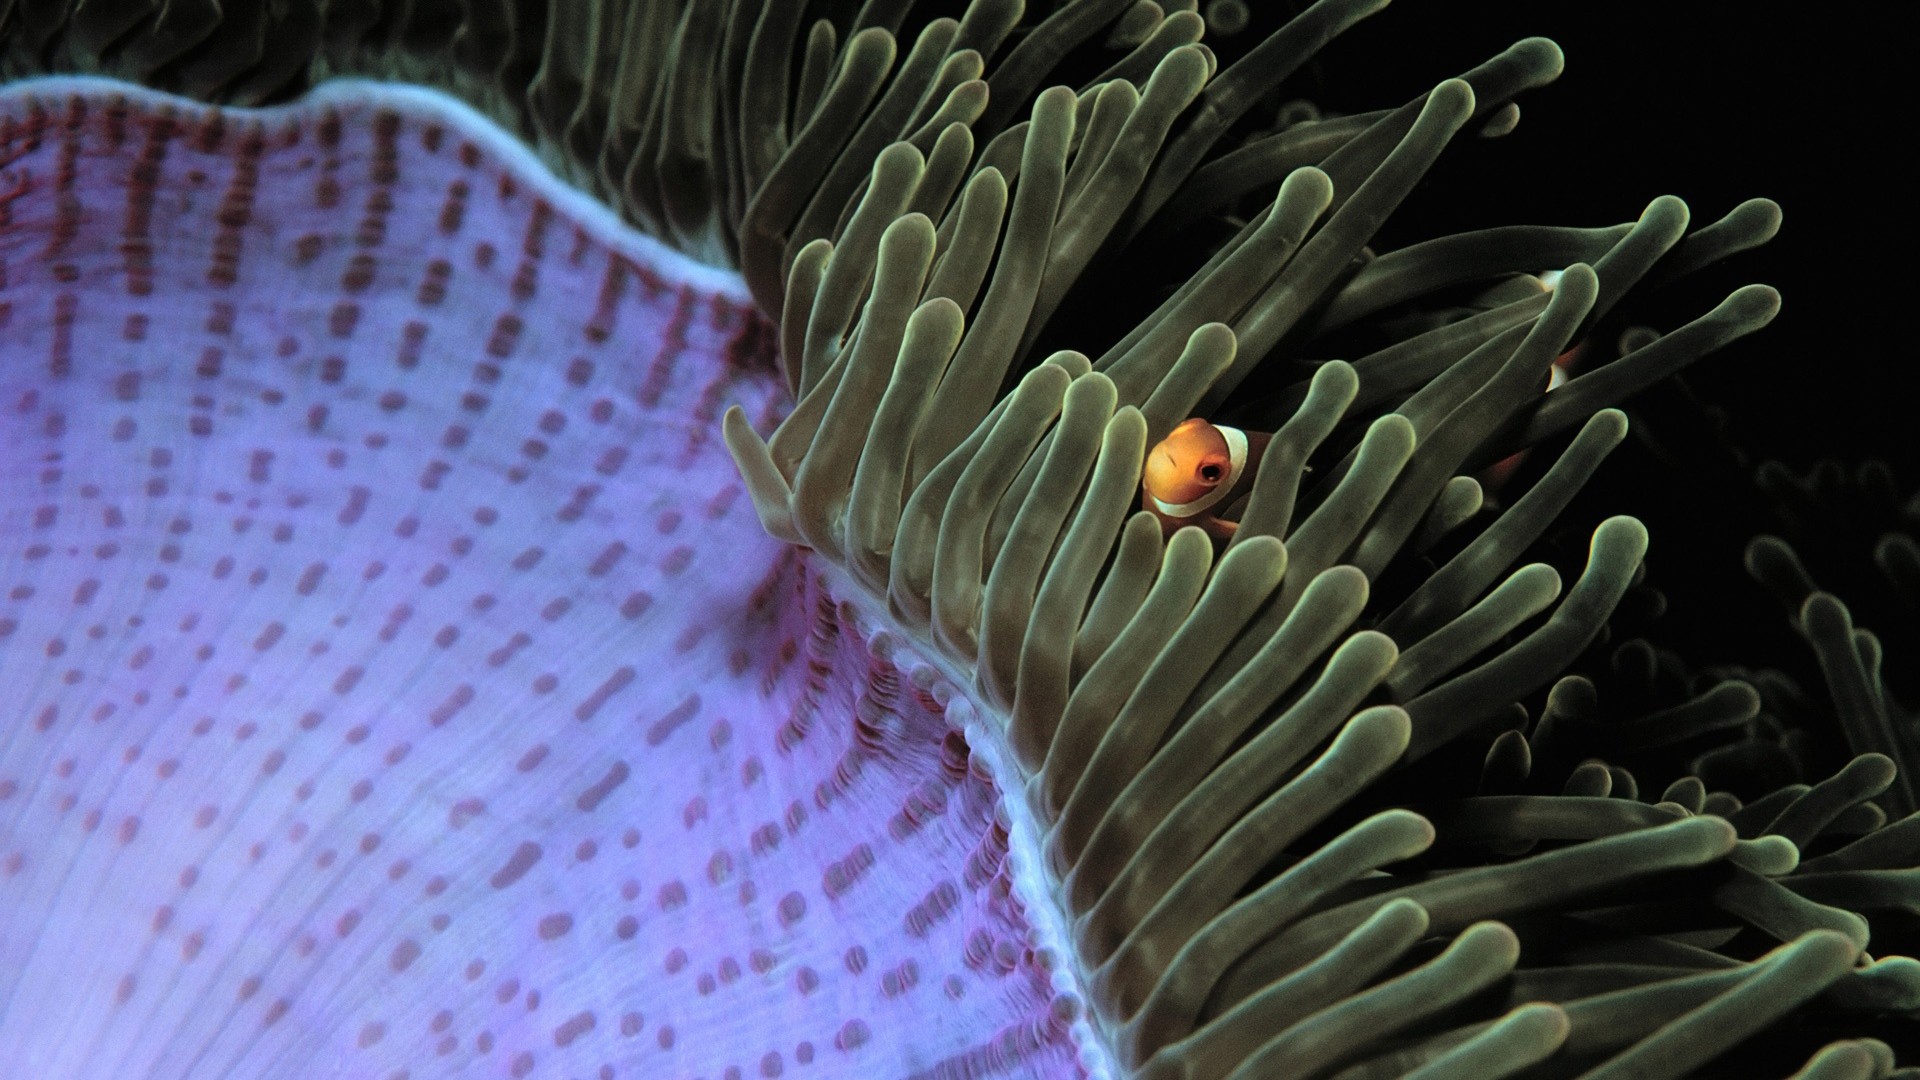 General 1920x1080 sea anemones fish clownfish underwater animals